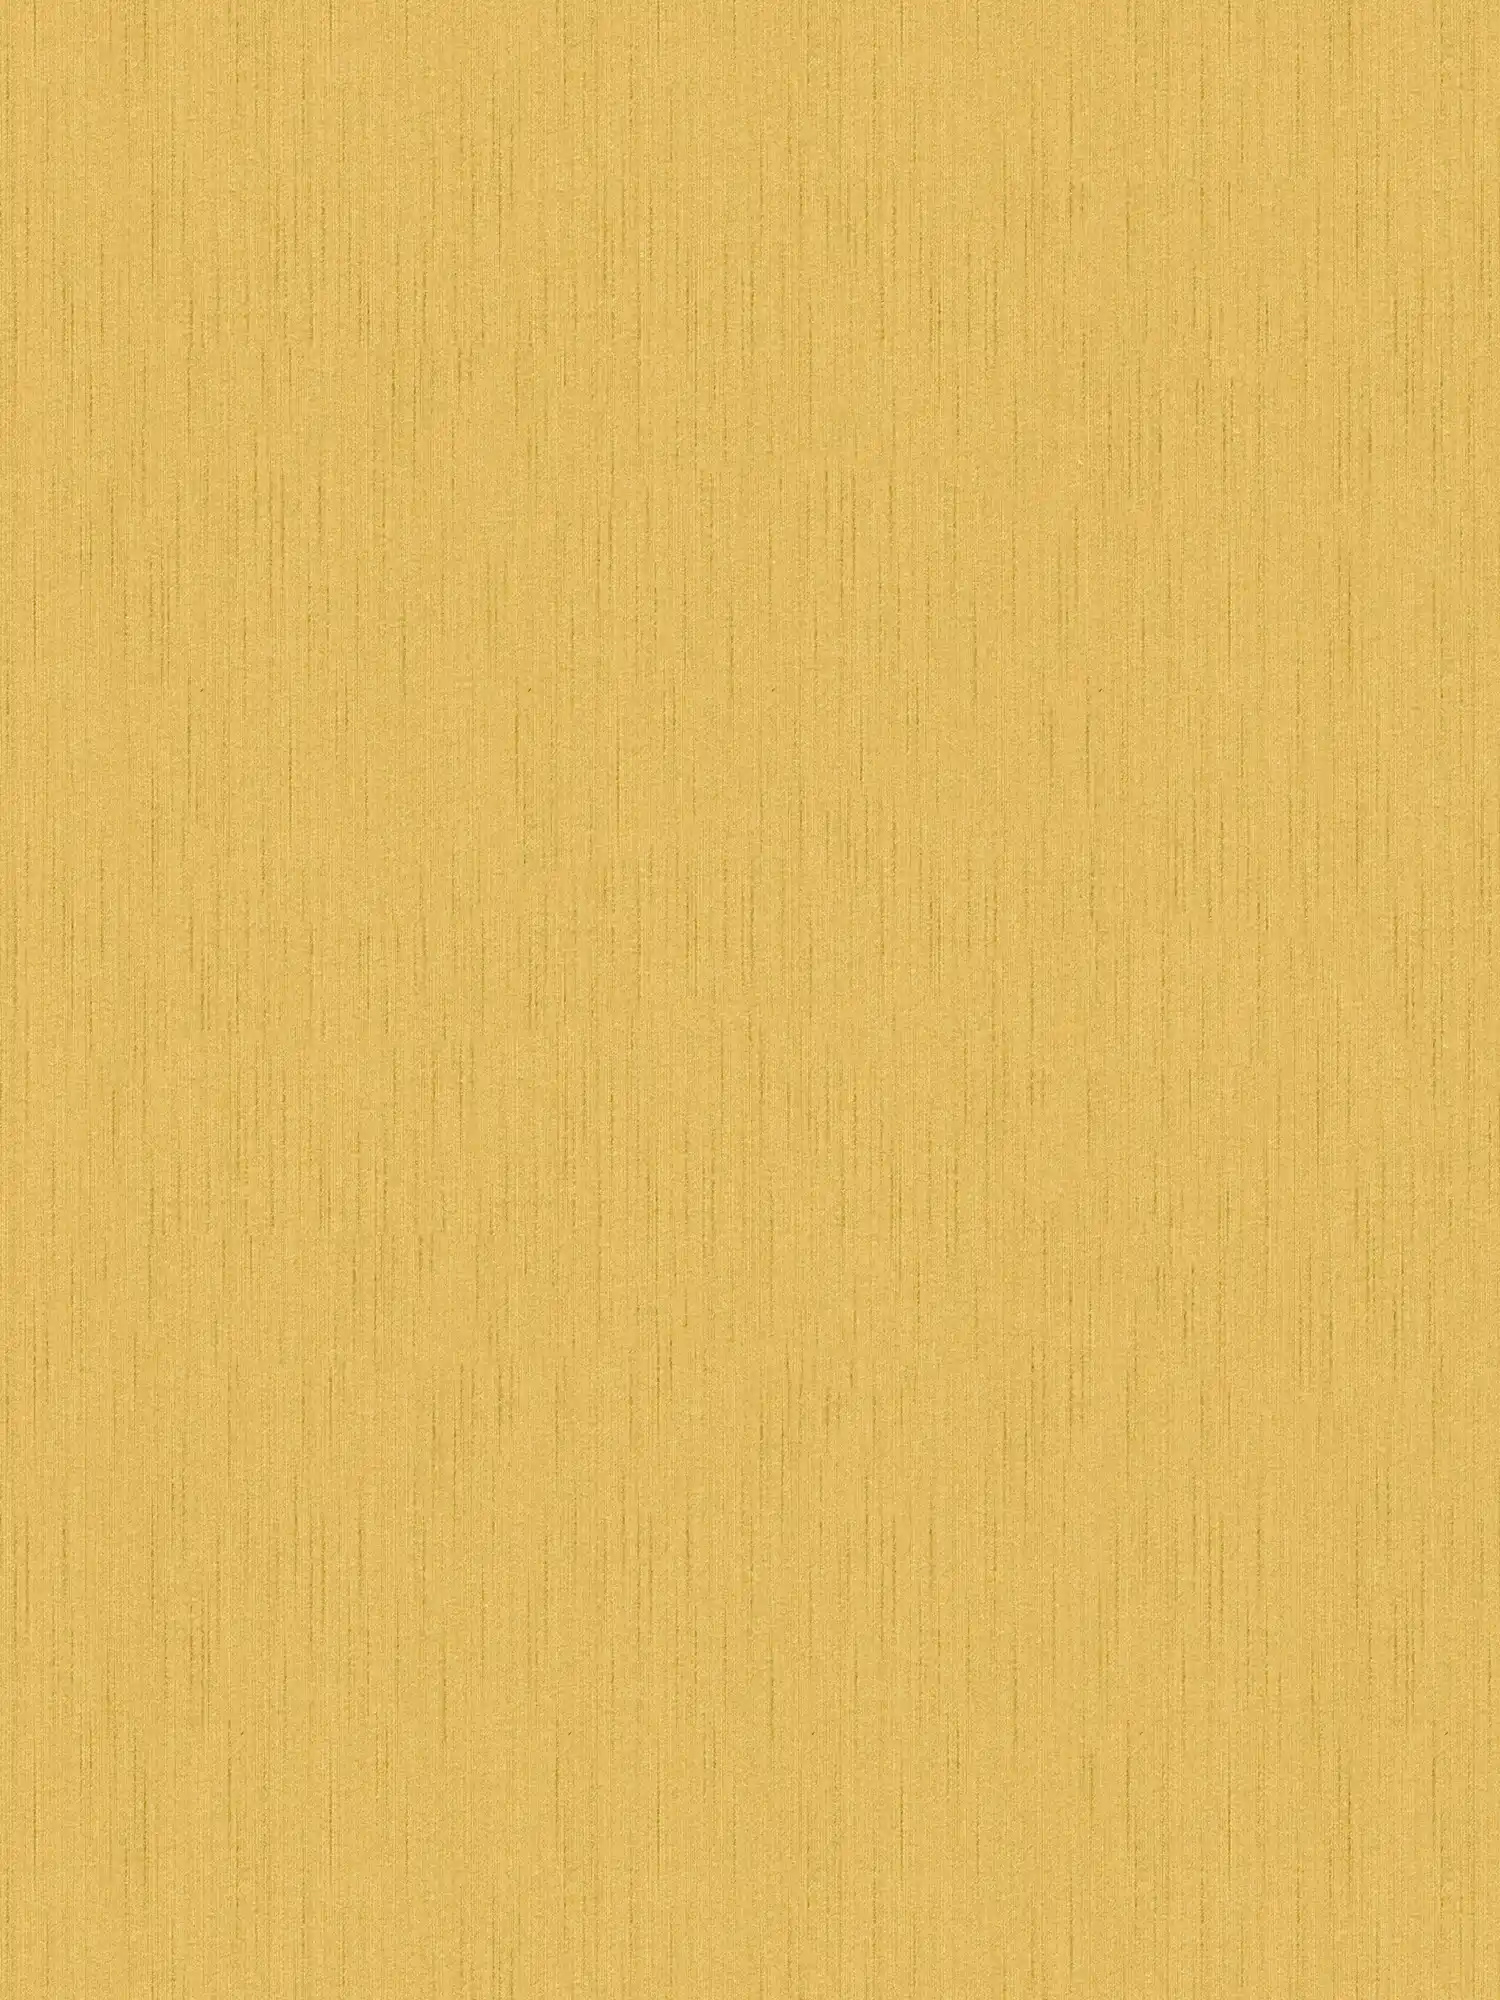 Papel pintado amarillo mostaza no tejido con motivos moteados - amarillo
